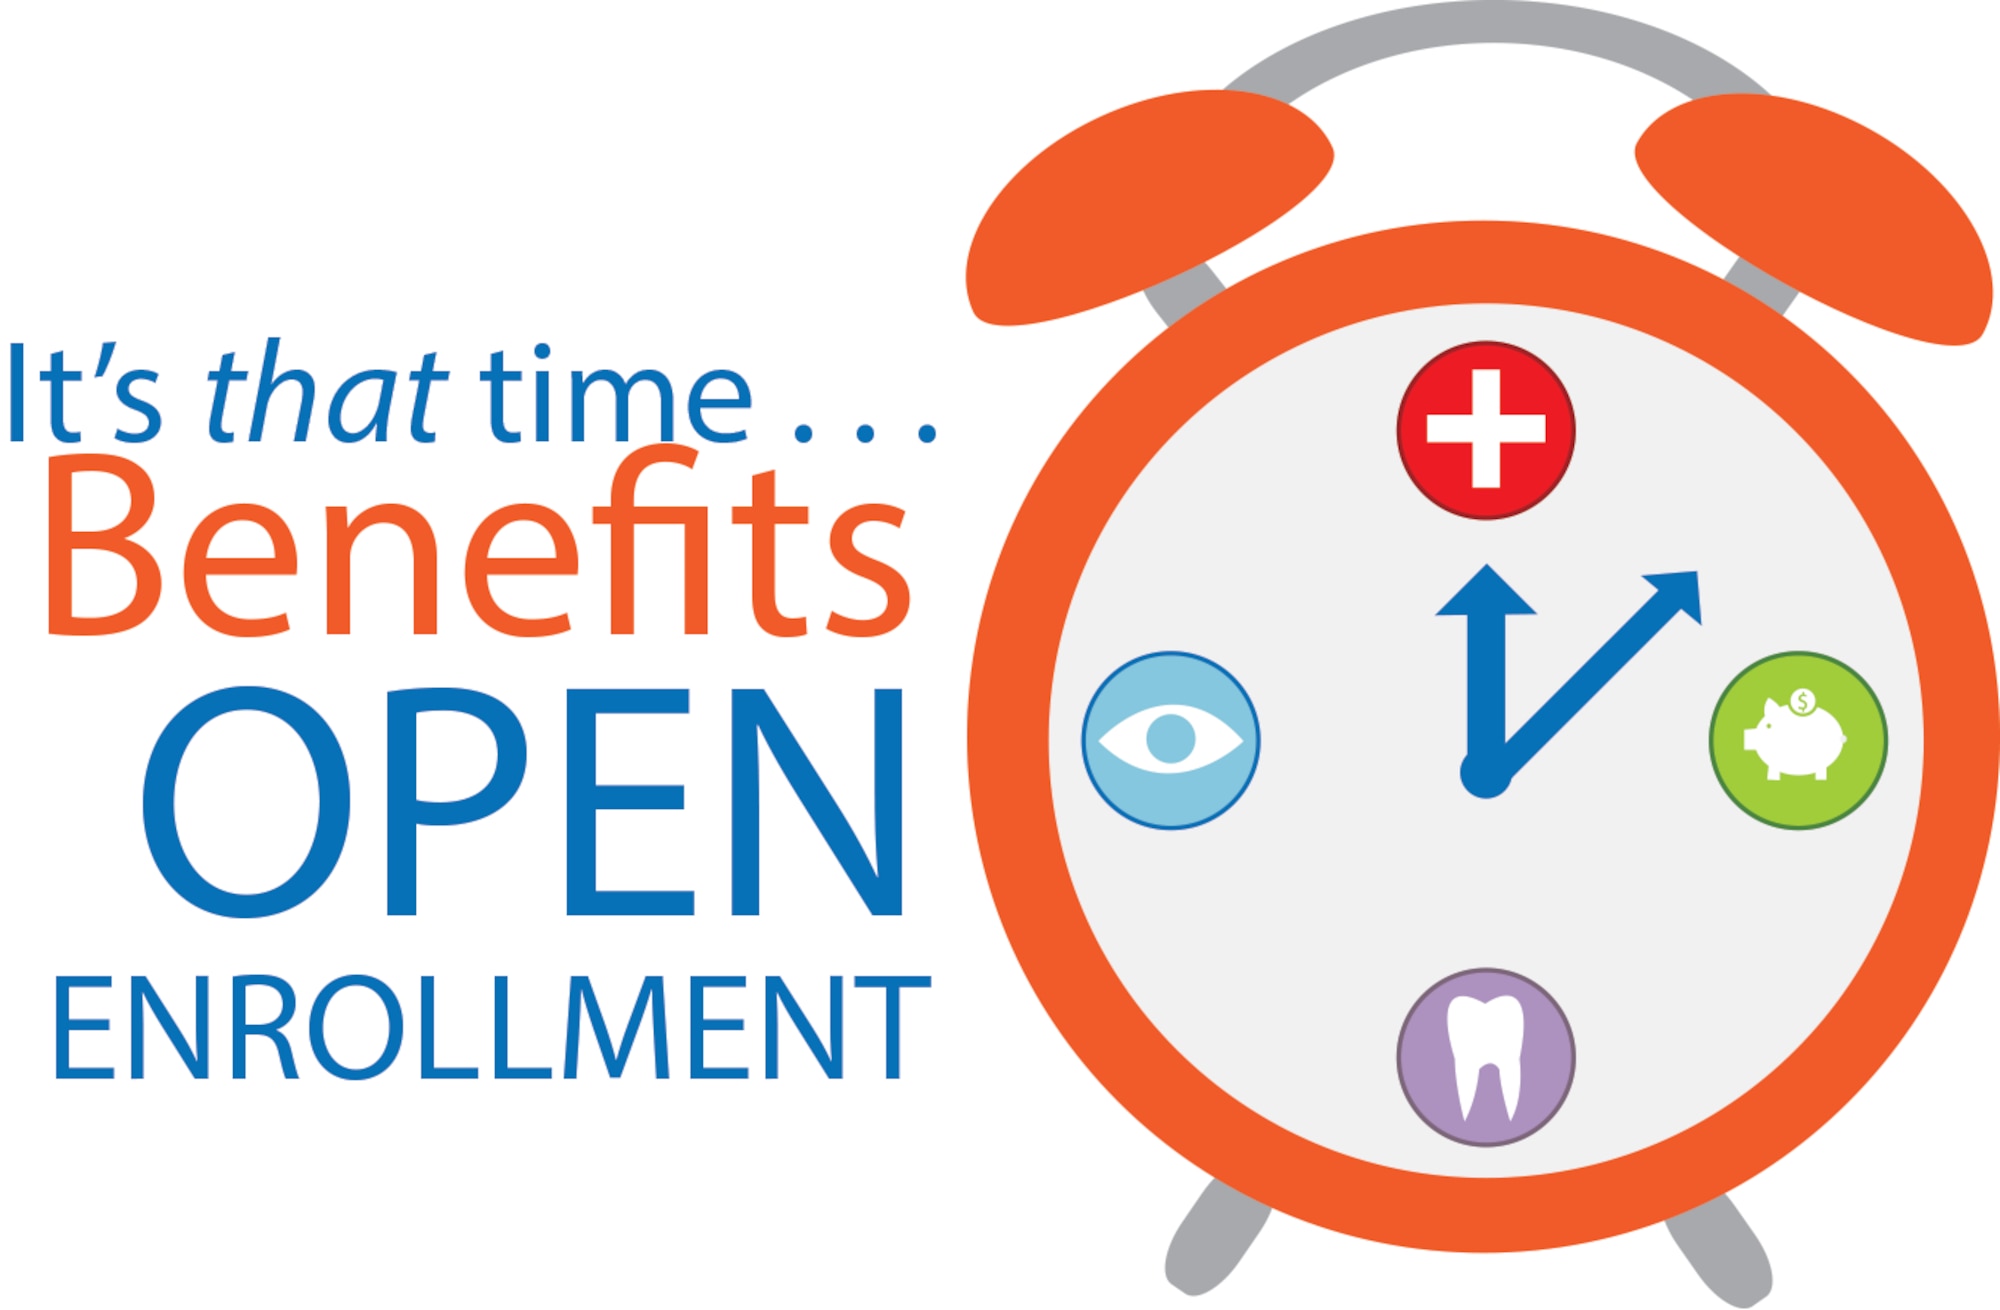 Benefits open enrollment